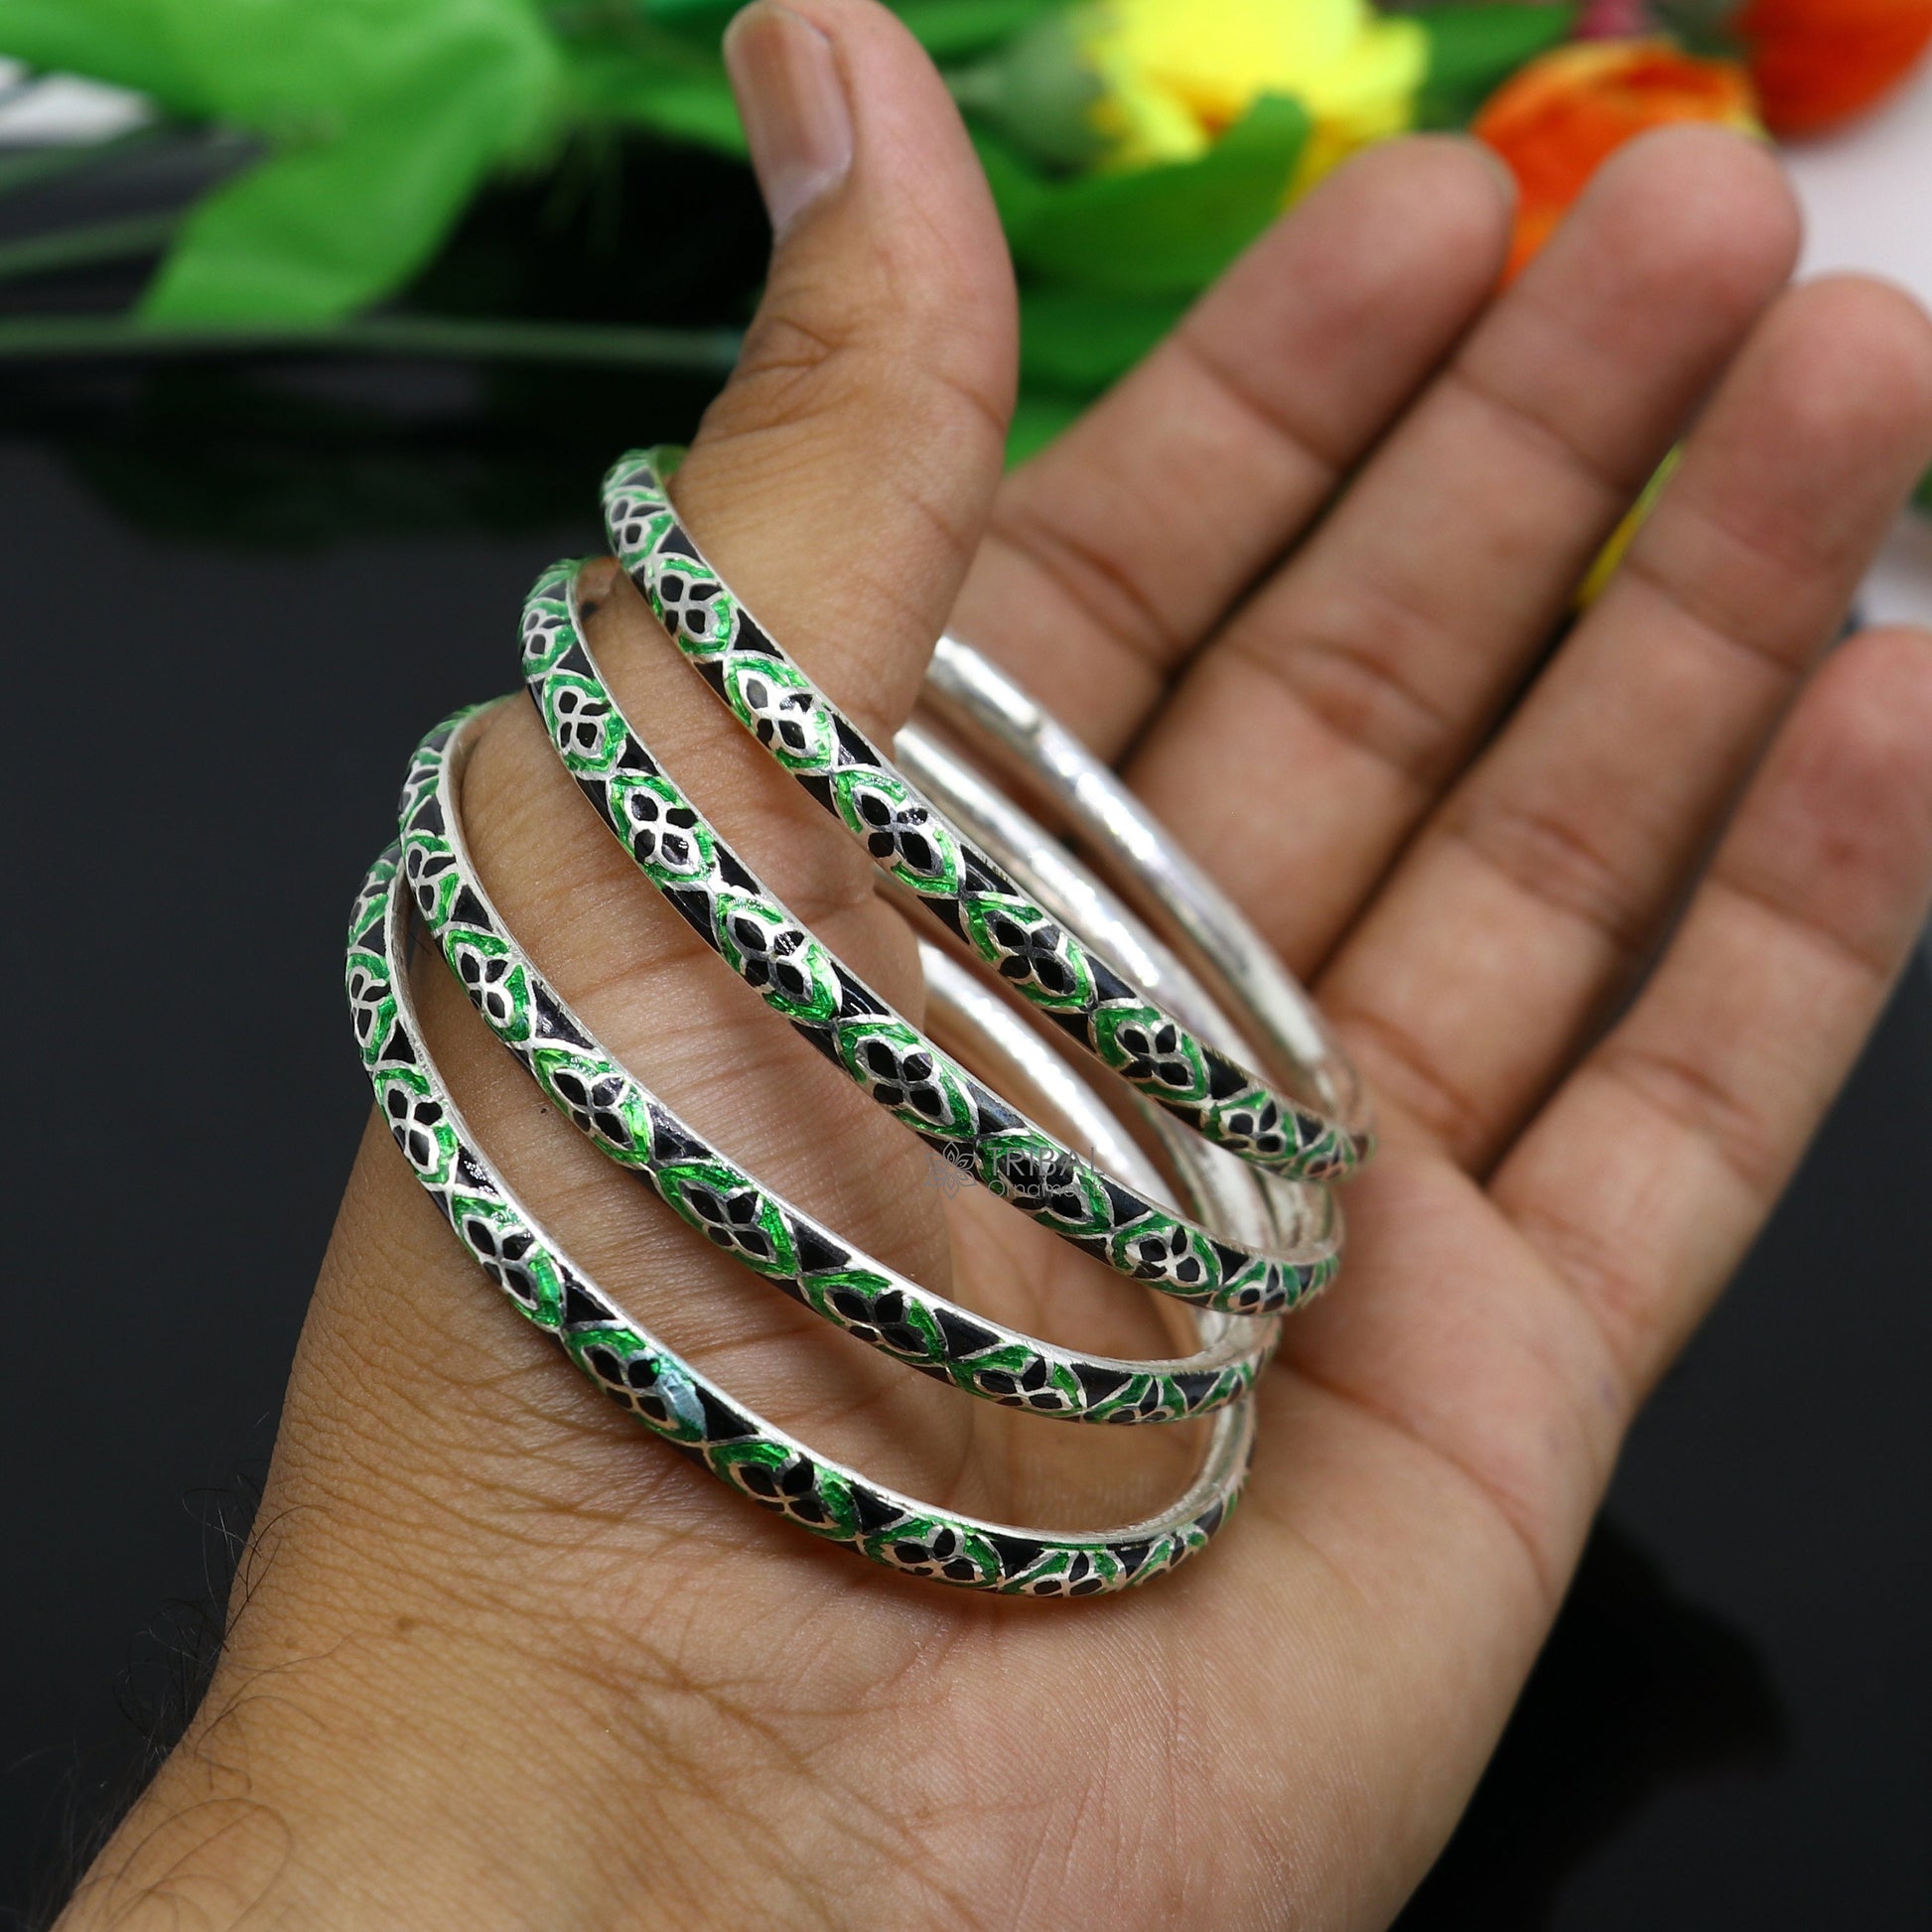 925 Sterling silver handmade amazing meenakari (multi color enamel )bangle bracelet floral design Cultural trendy style jewelry nba368 - TRIBAL ORNAMENTS